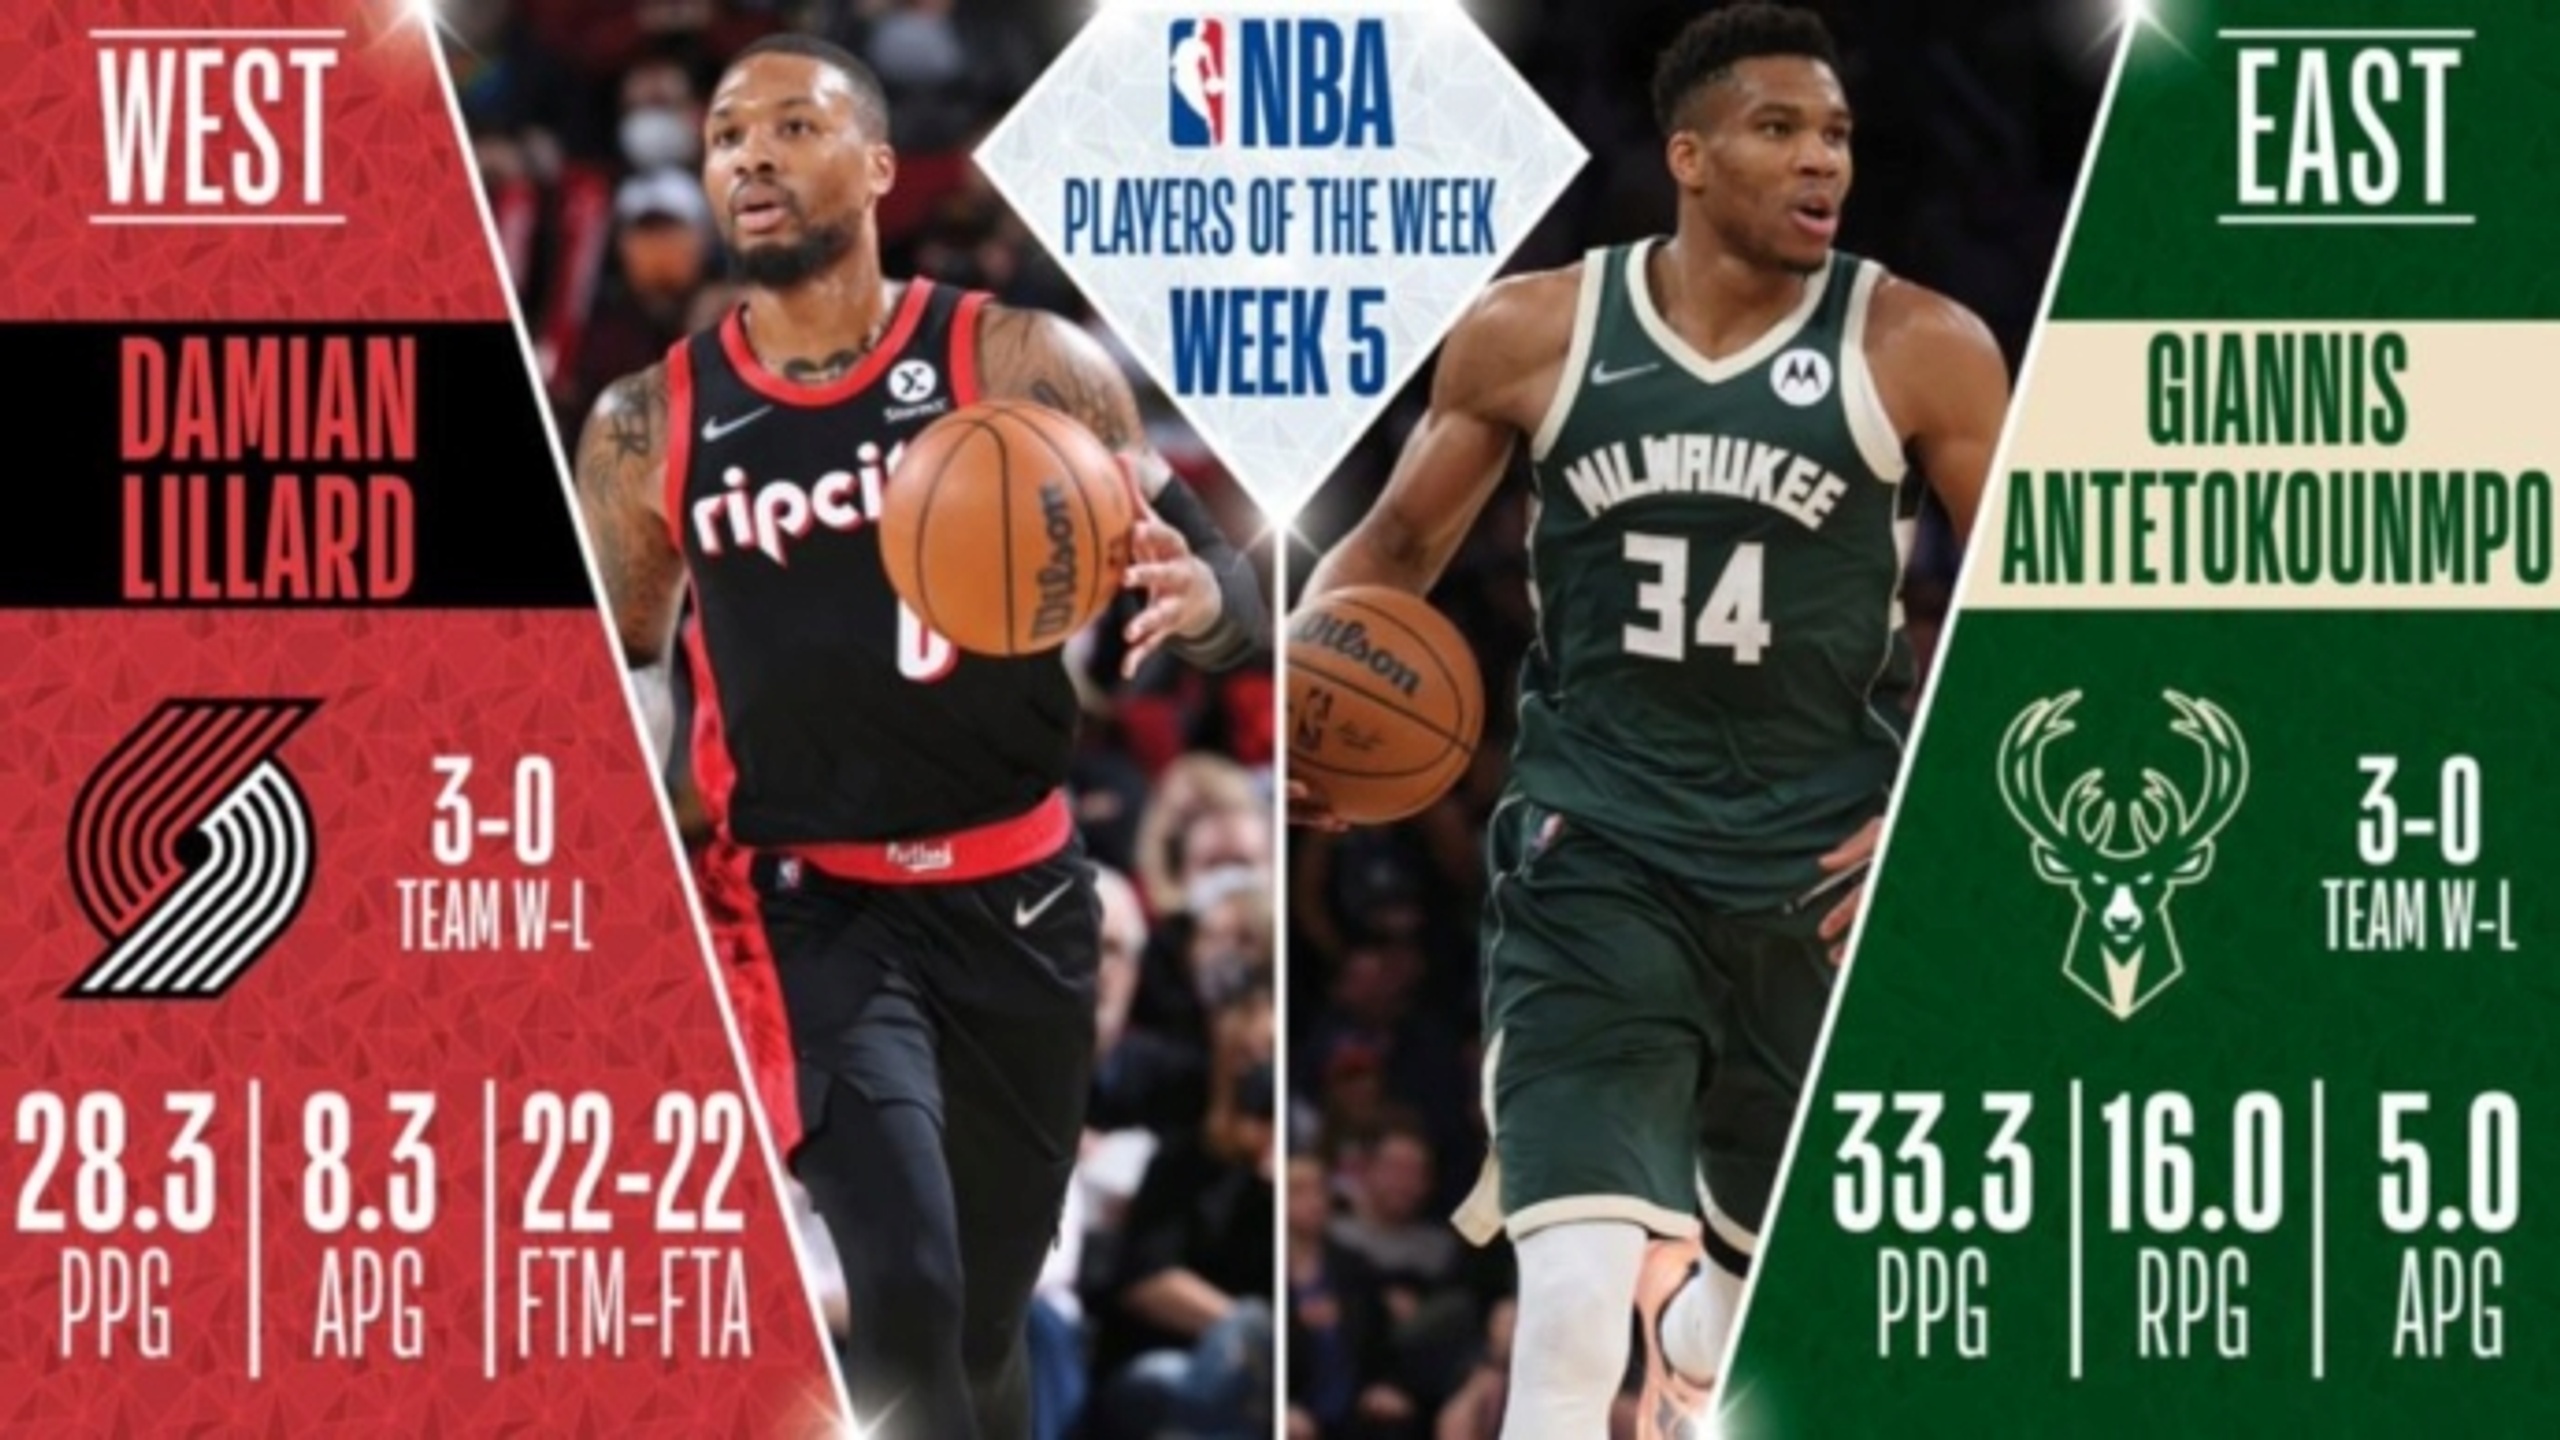 Lillard, Antetokounmpo named NBA Player of the Week for Nov. 15-21